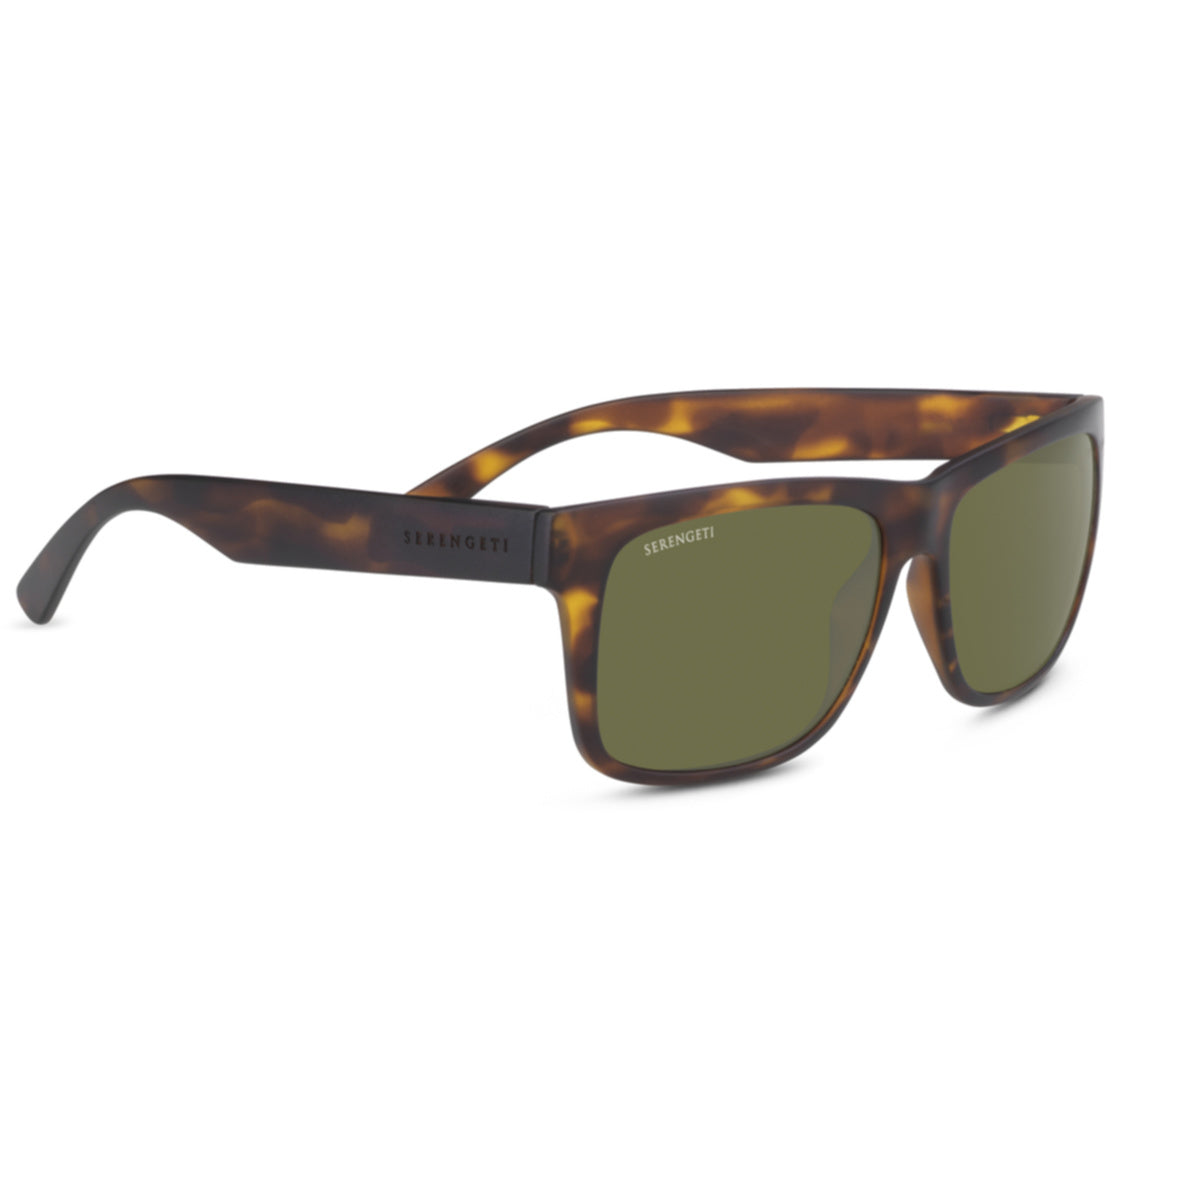 Serengeti Positano Sunglasses  Matte Tortoise Medium-Large, Large